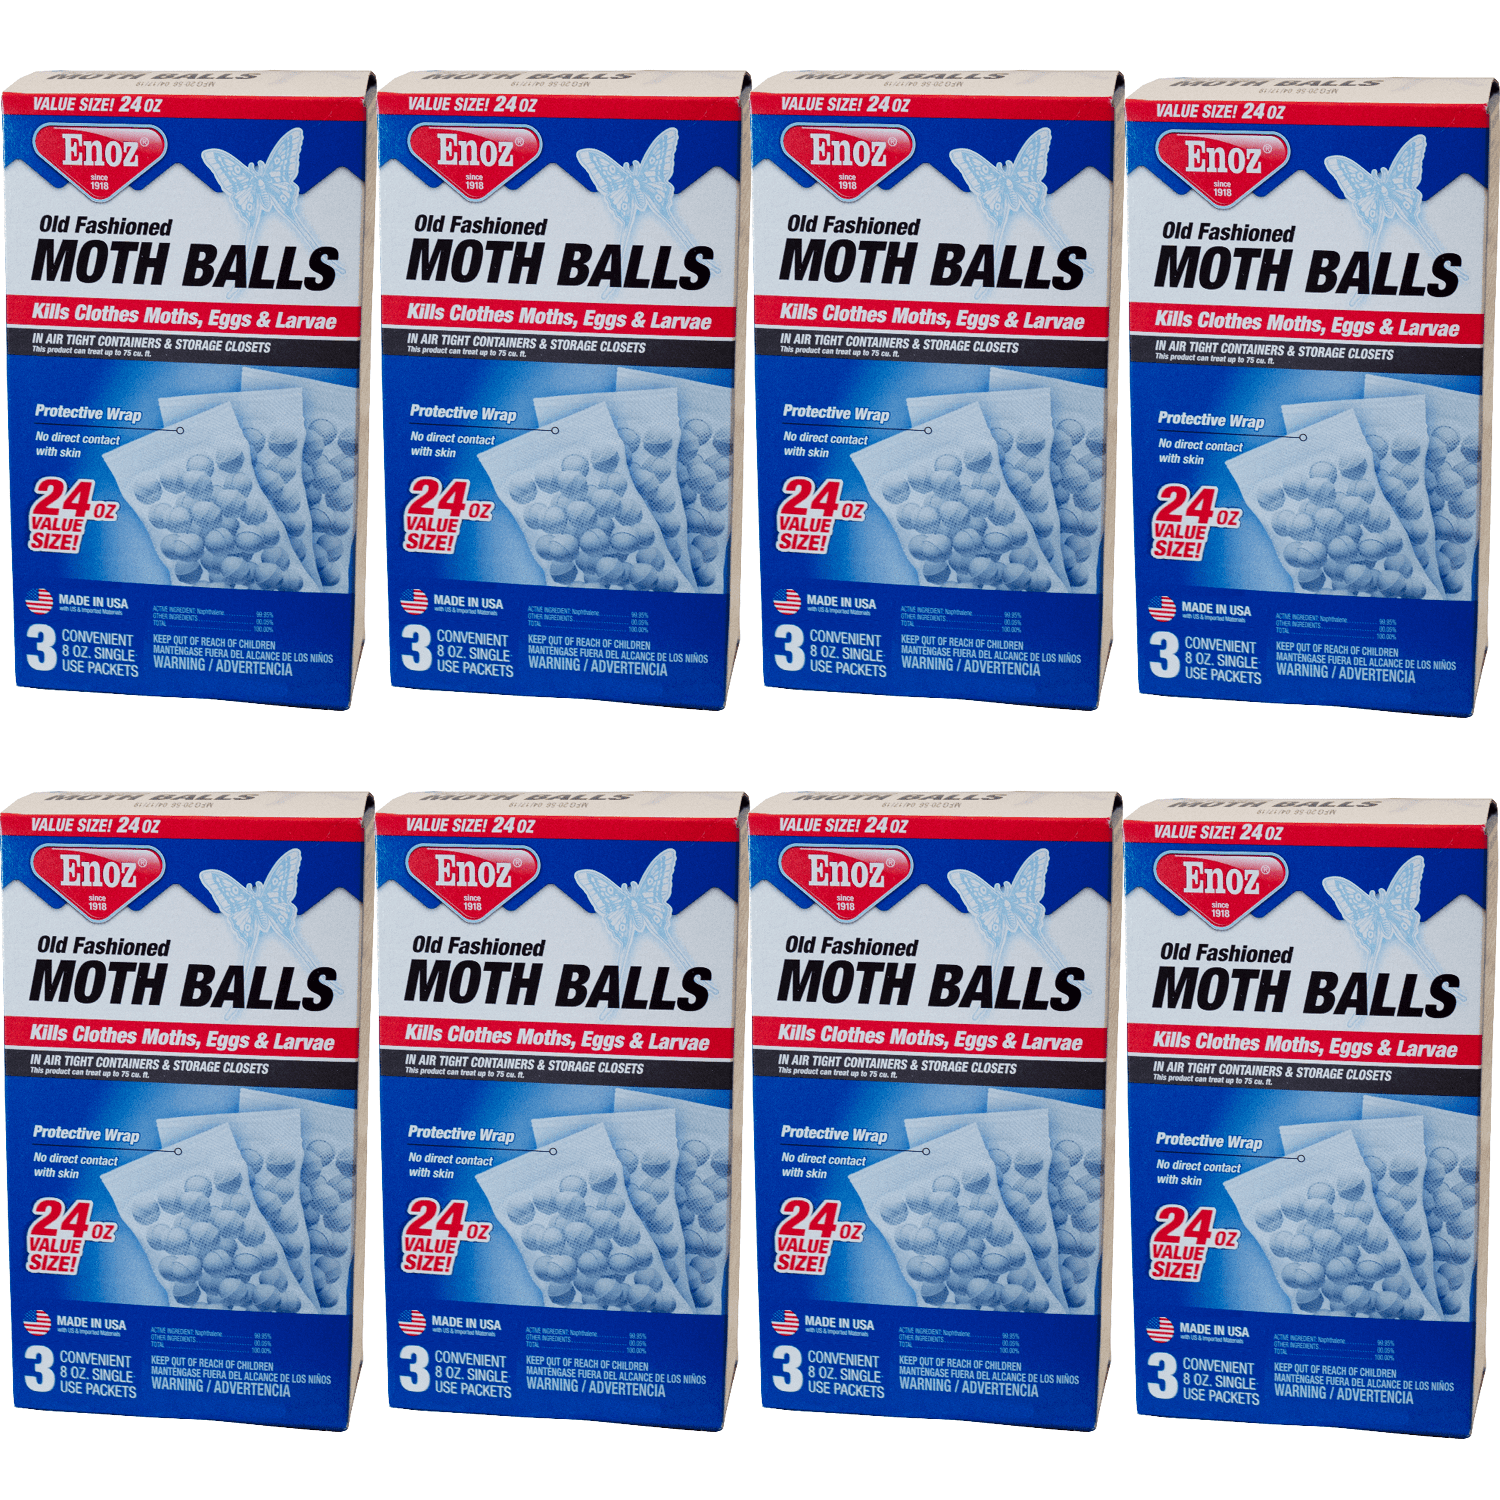 Enoz Old Fashioned Moth Balls, Naphthalene Balls, 24 oz, 3 Single Use 8 oz  Packets 